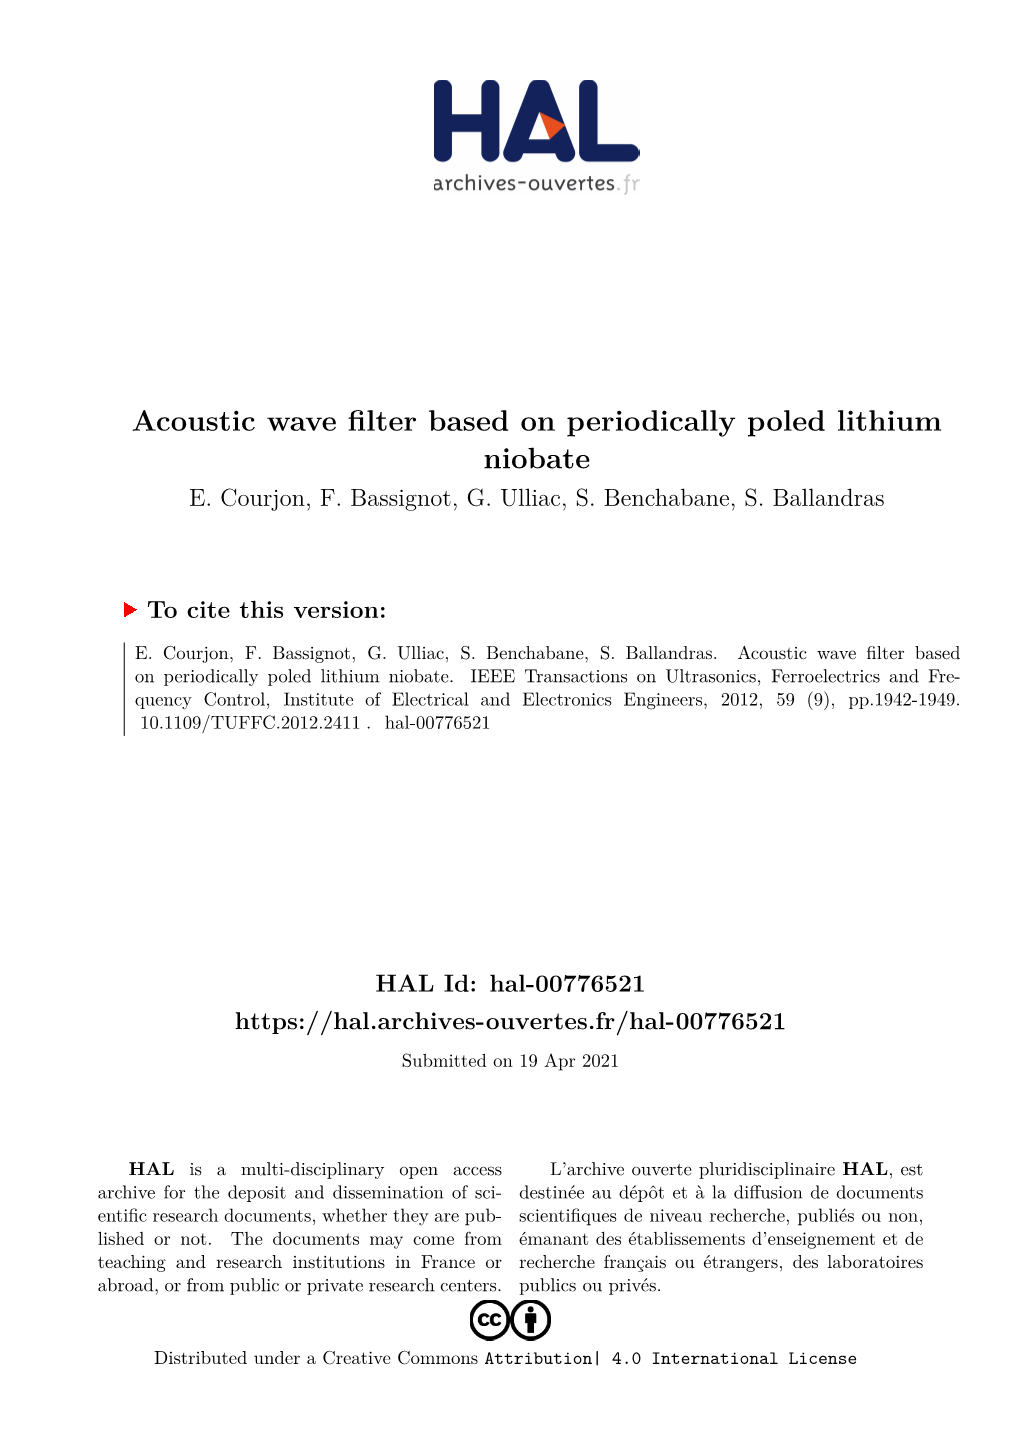 Acoustic Wave Filter Based on Periodically Poled Lithium Niobate E